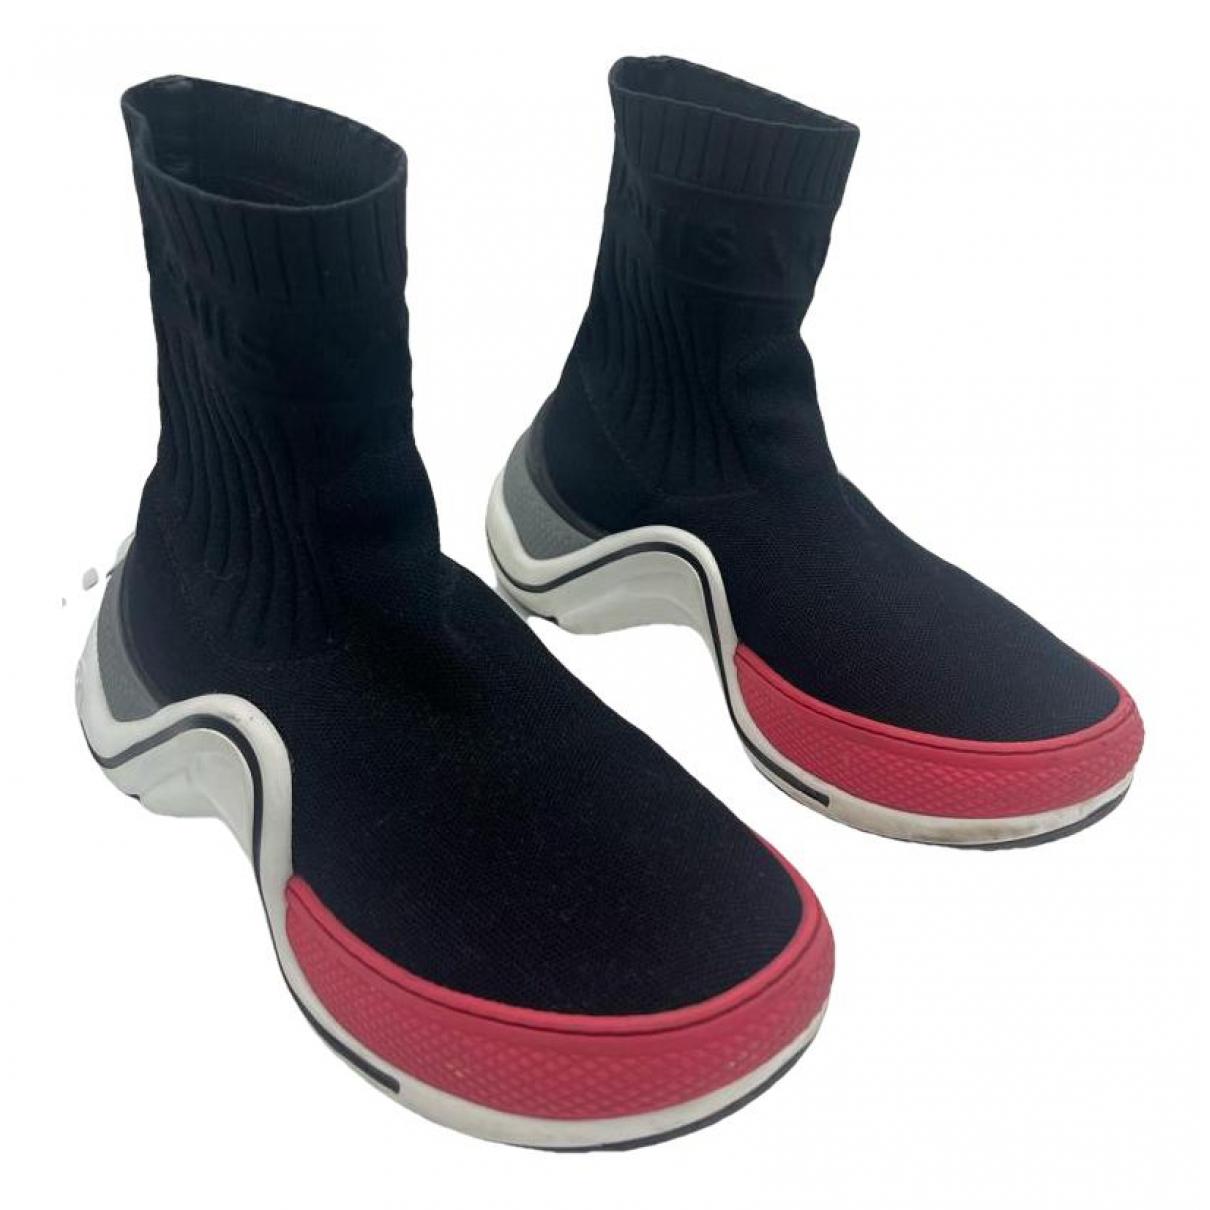 Louis Vuitton Archlight Sock Boots Sz 37